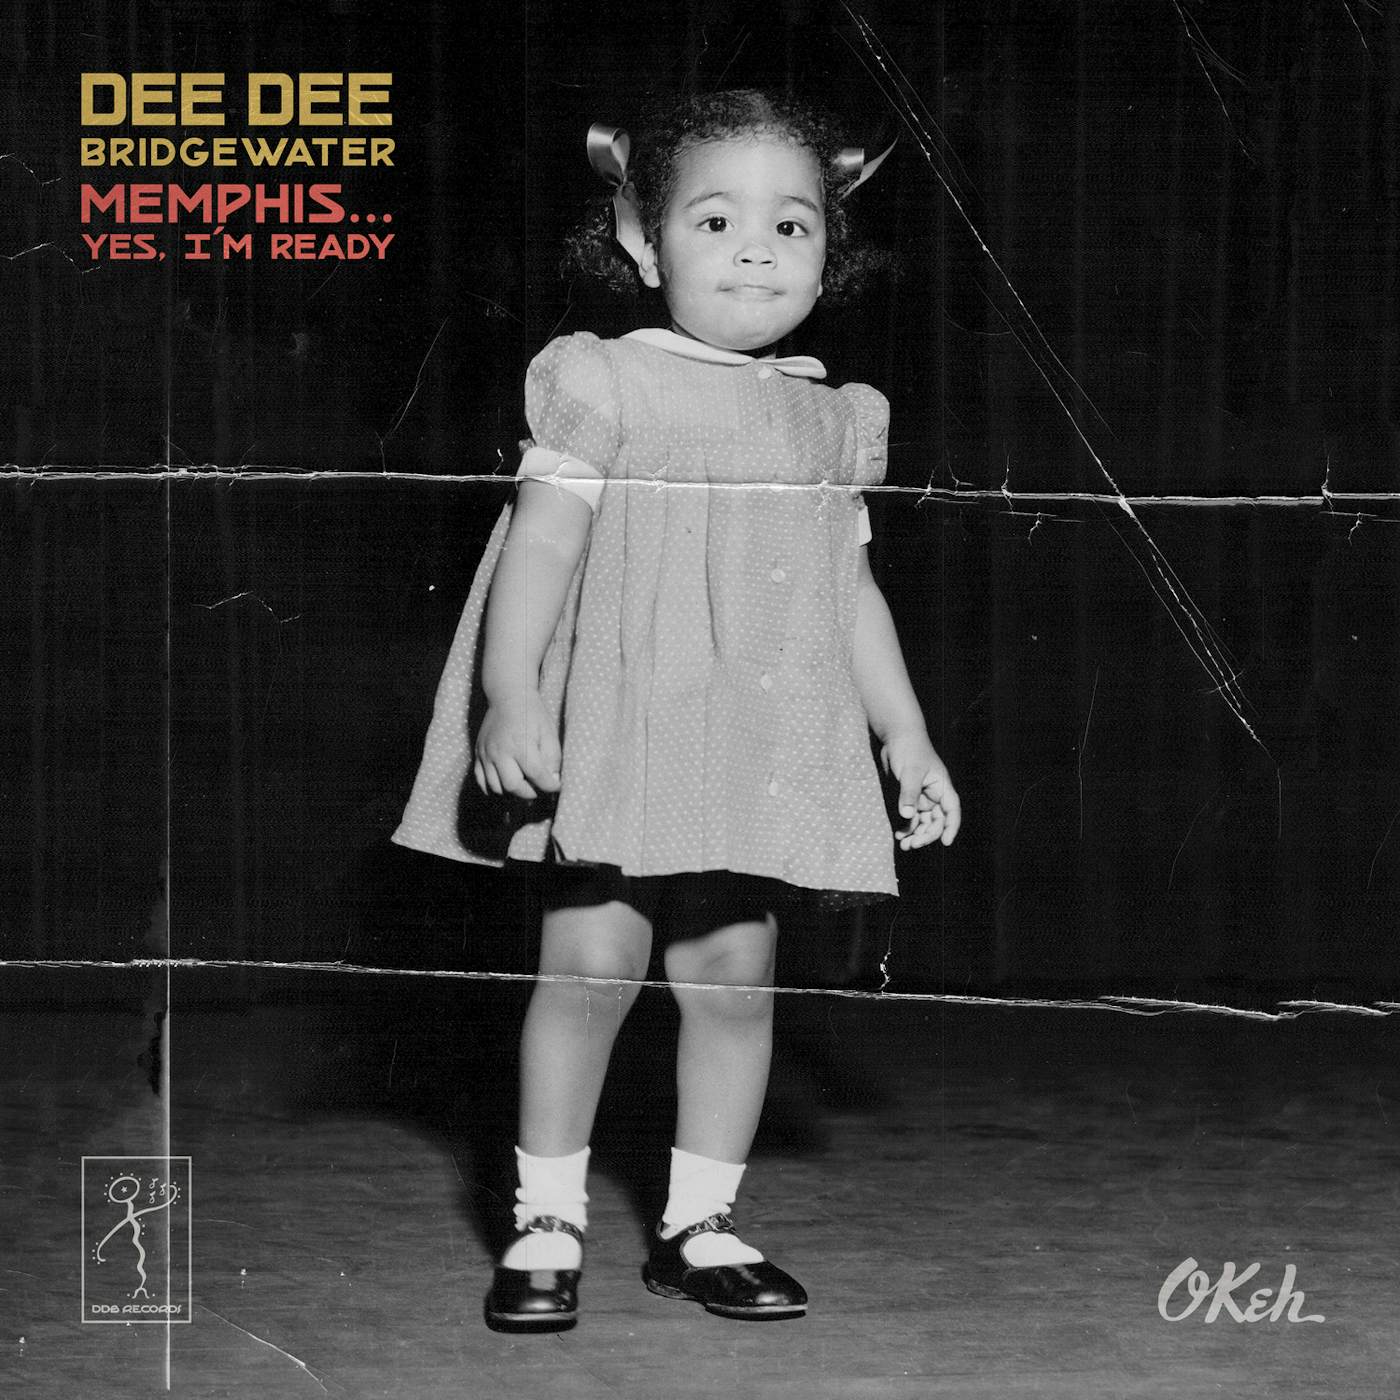 Dee Dee Bridgewater MEMPHIS: YES I'M READY CD